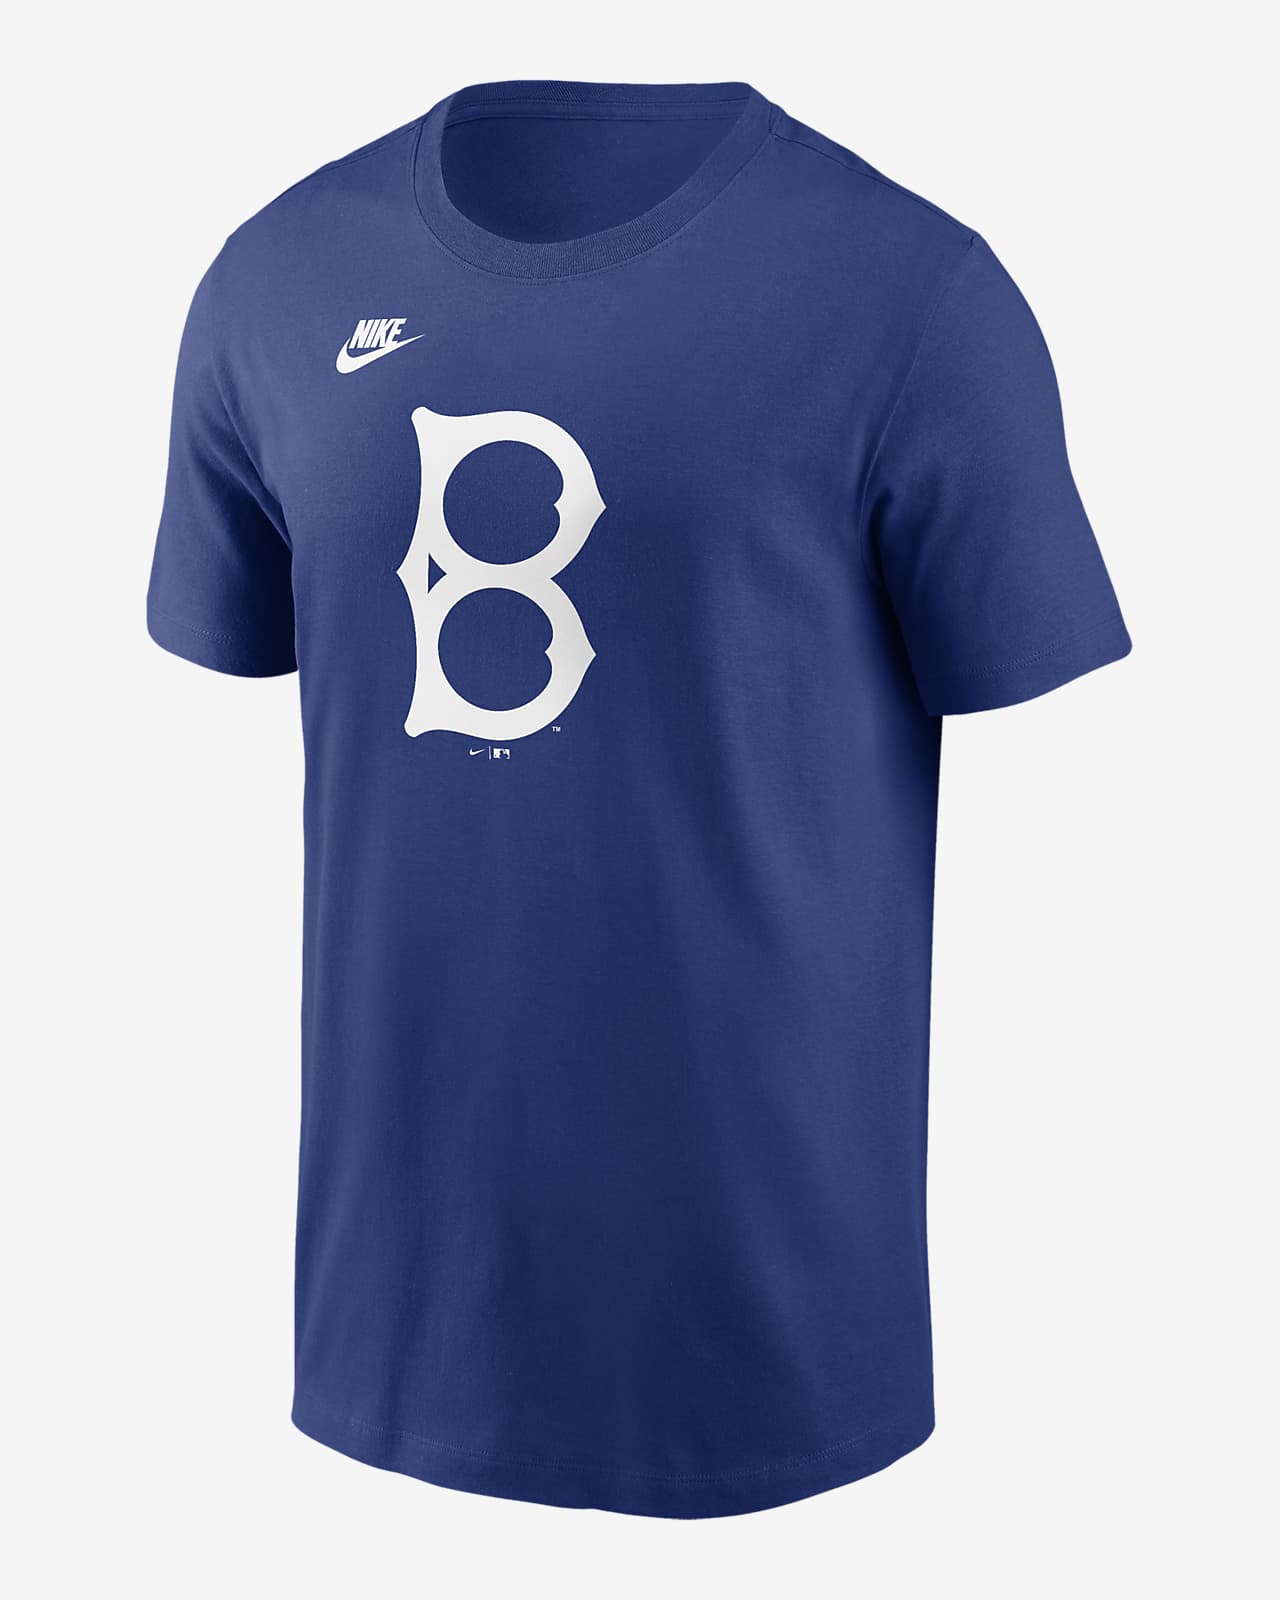 Brooklyn Dodgers Cooperstown Logo Men's Nike MLB T-Shirt